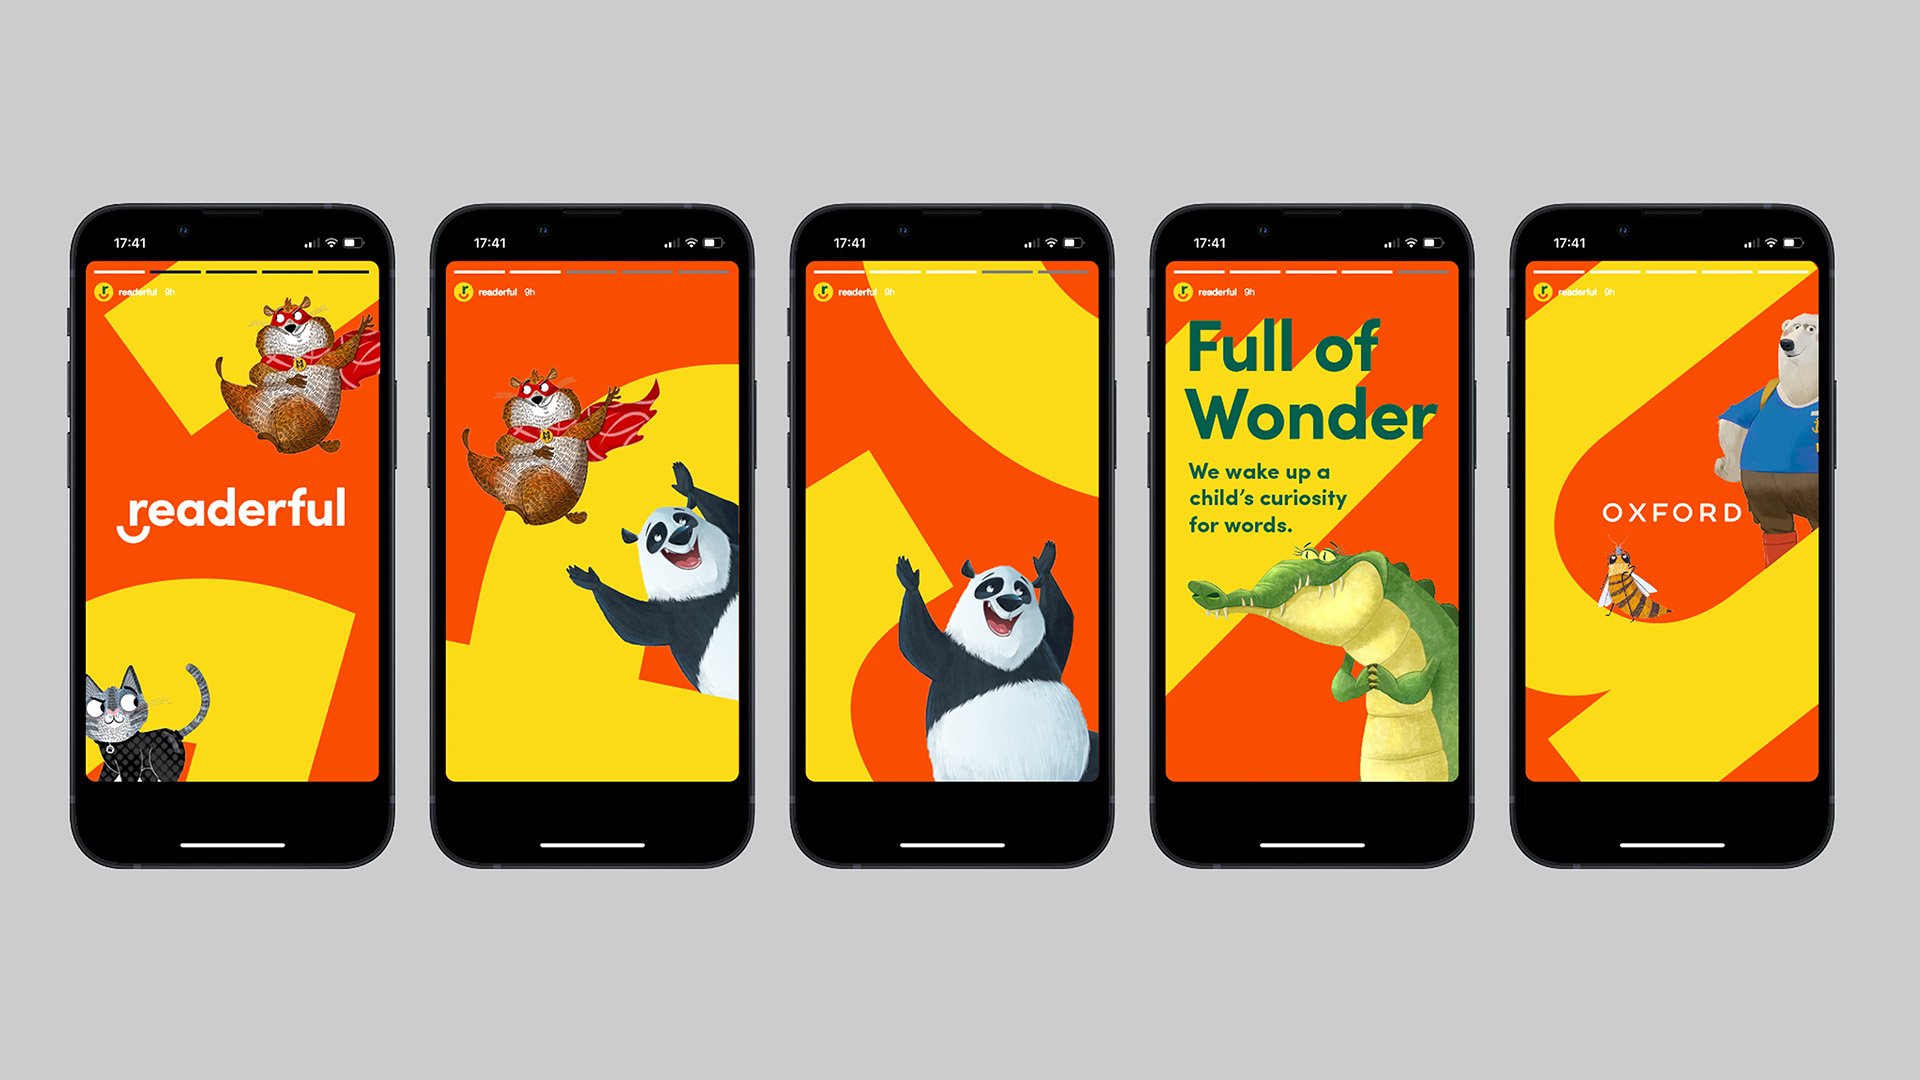 Readerful branding shown across a range of smartphone screens